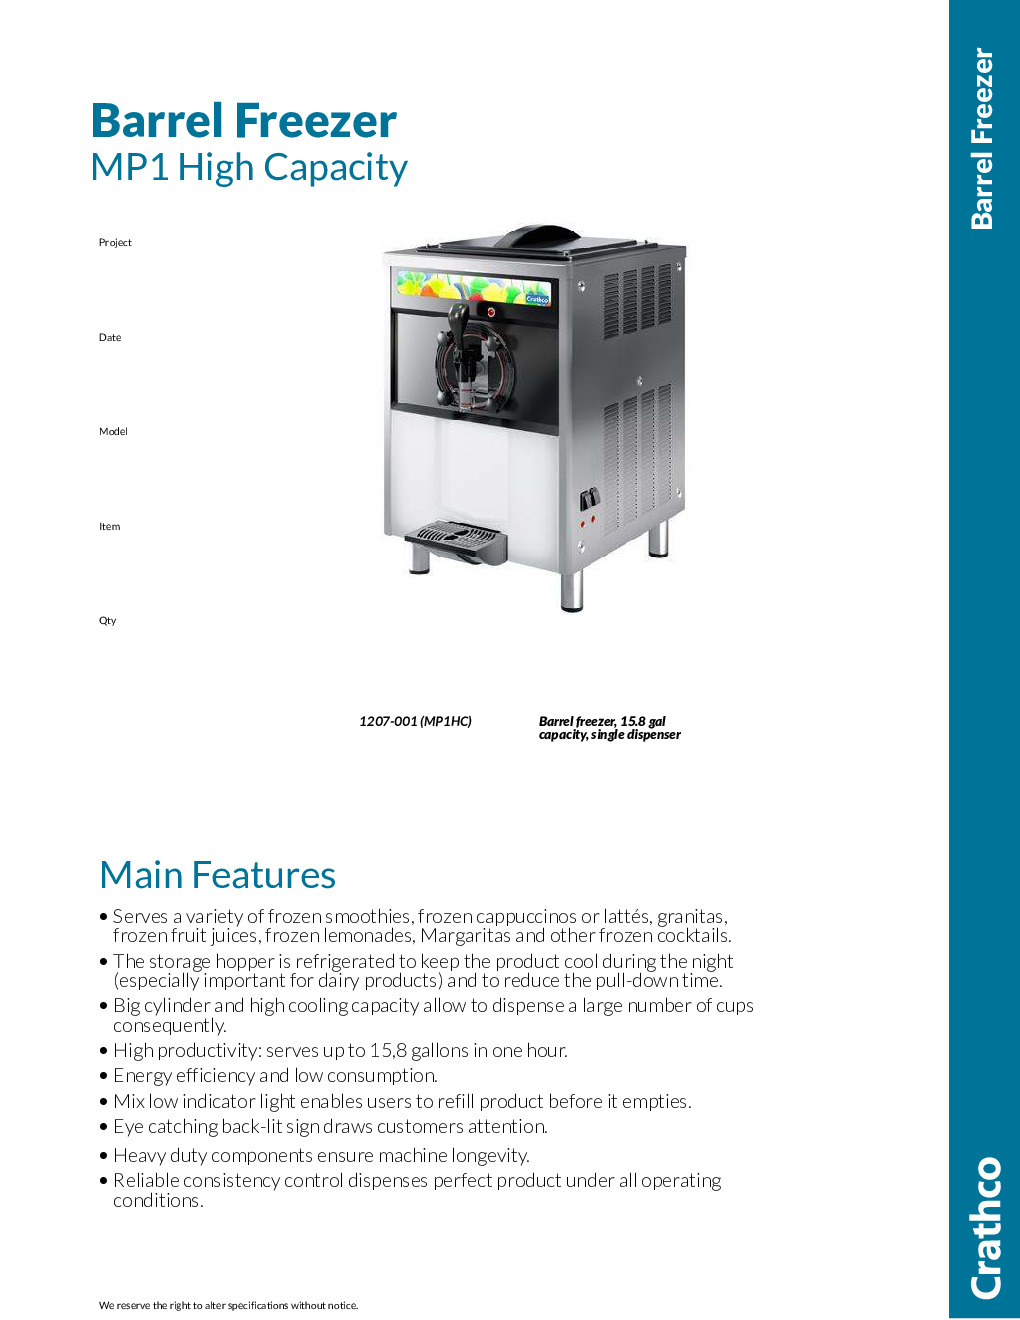 Crathco ® Mp1Hc Large Capacity Barrel Freezer Frozen Beverage Dispenser, Air Cooled